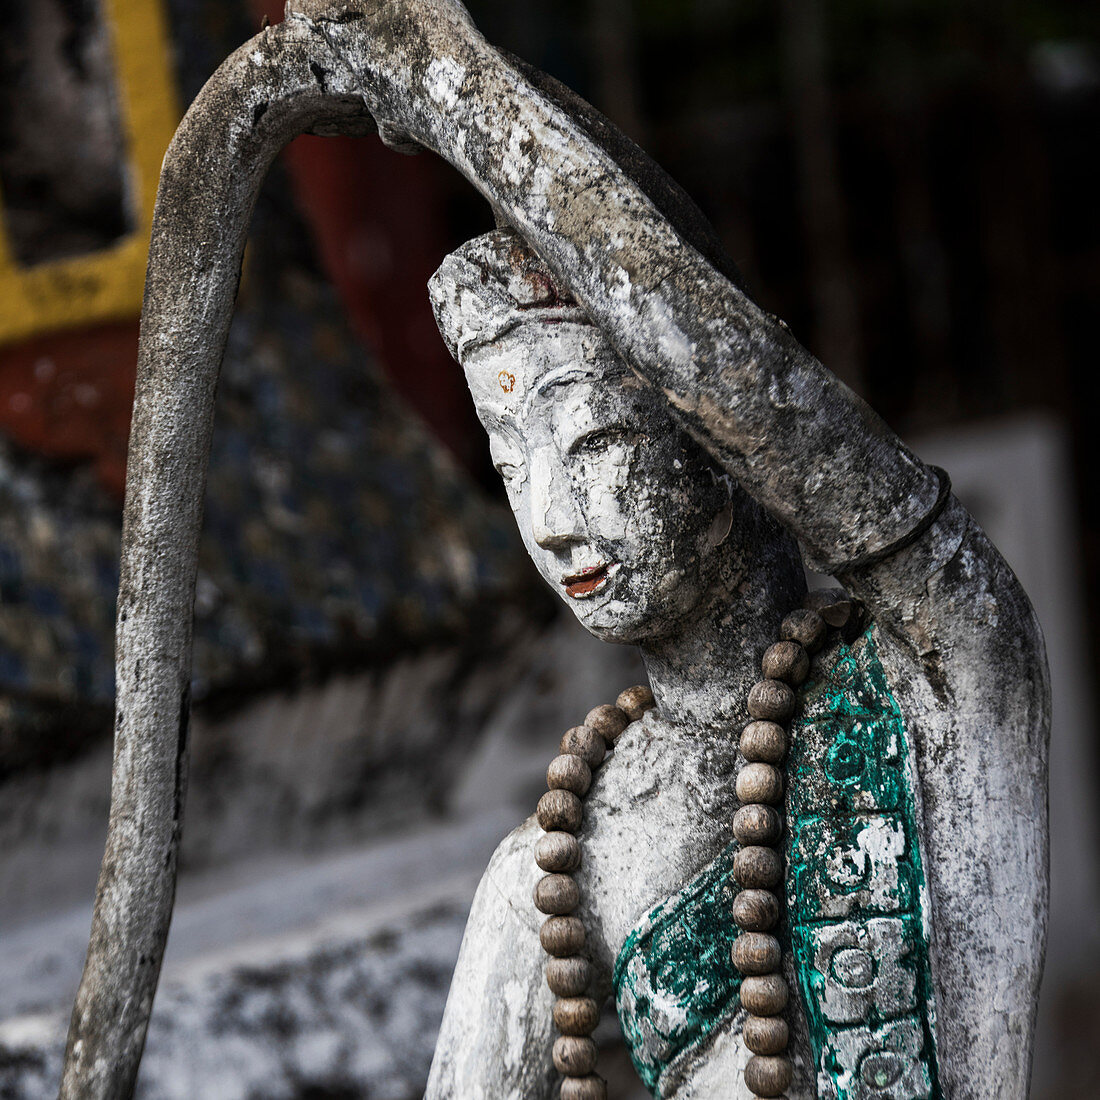 'Worn and weathered buddhist sculpture; Luang Prabang, Luang Prabang Province, Laos'